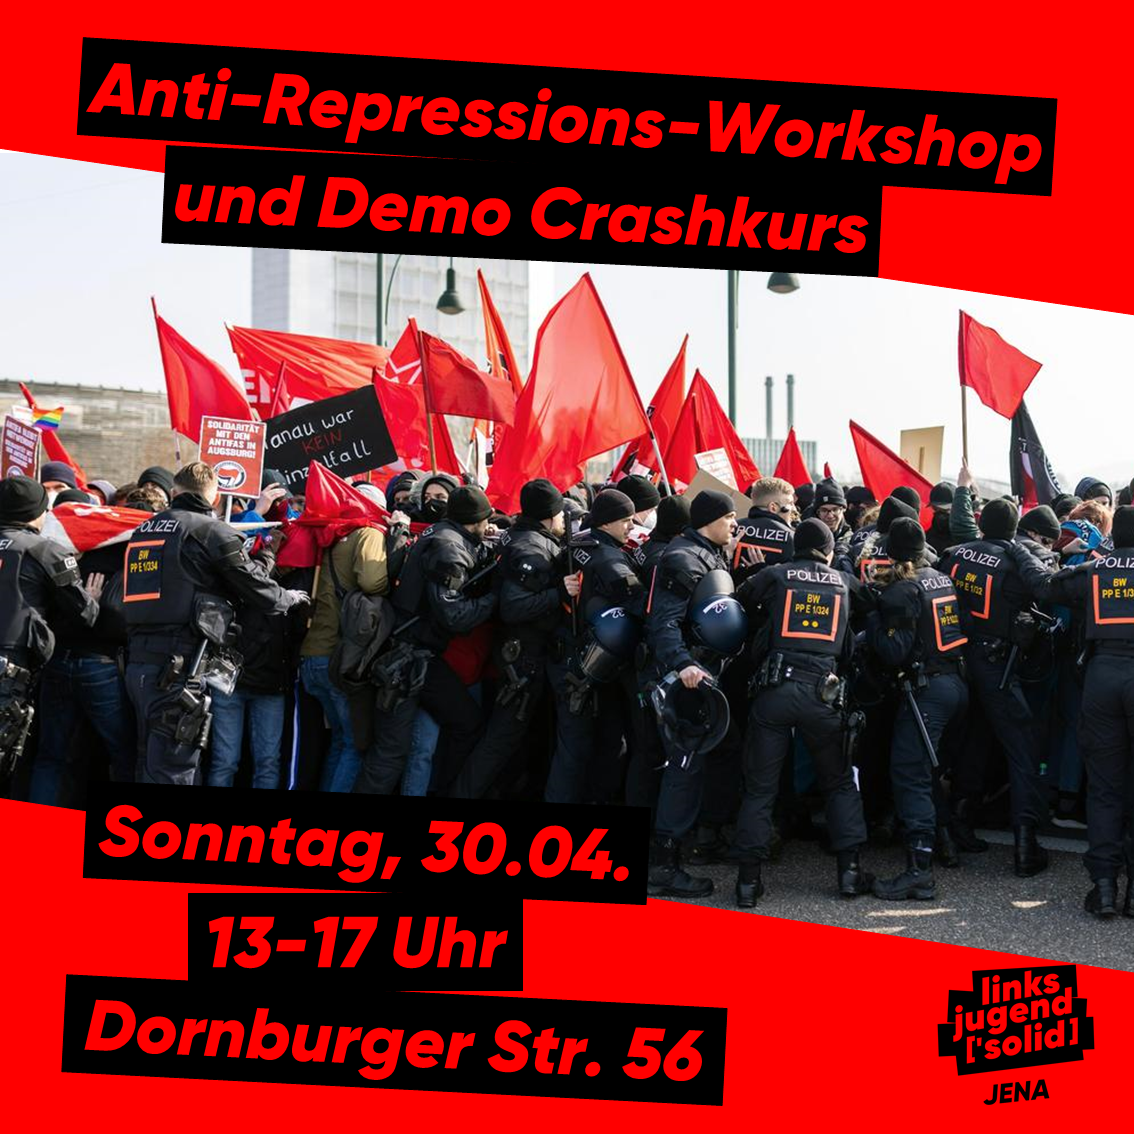 Anti-Repressions-Workshop und Demo Crashkurs